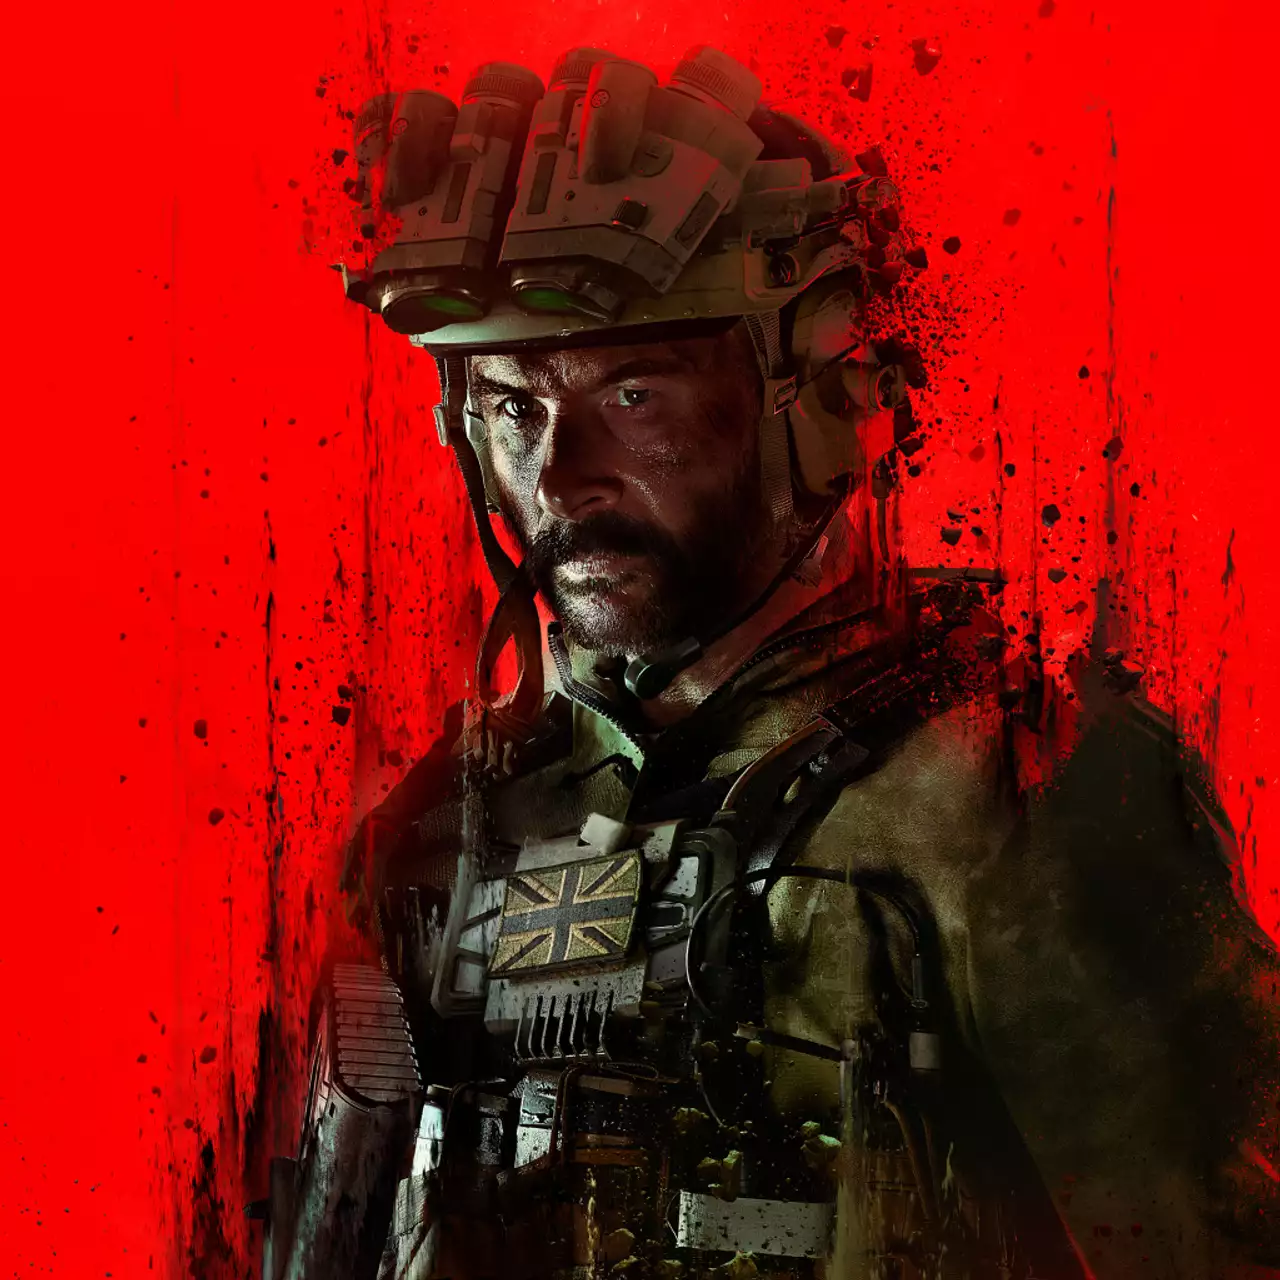 Slide Canceling & Dead Silence Return in Modern Warfare 3 - Esports  Illustrated